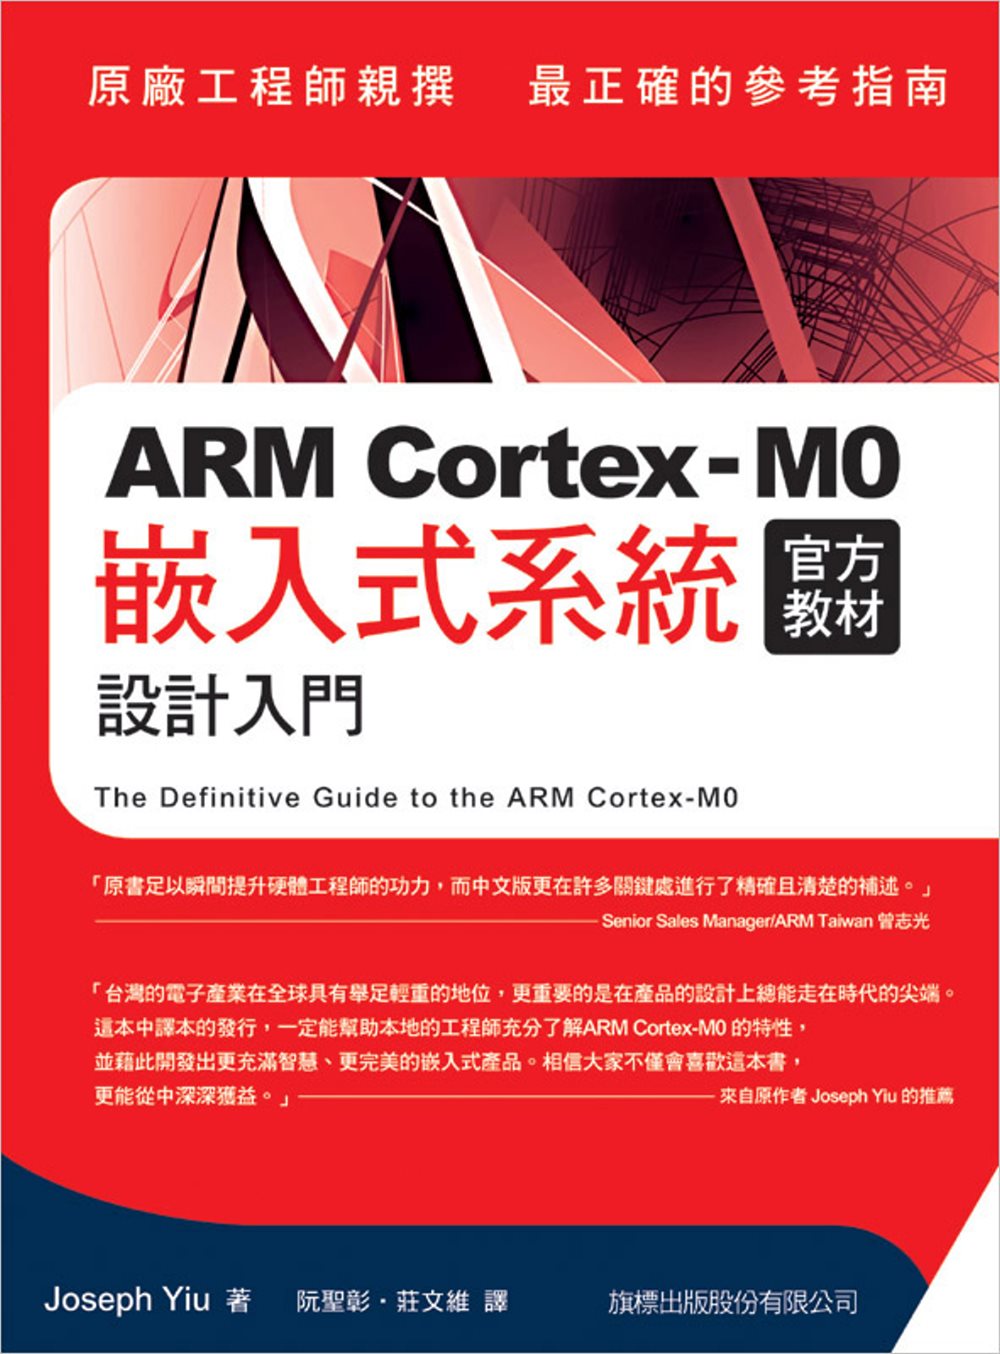 ARM Cortex-M0 官方教材：嵌入式系統設計入門